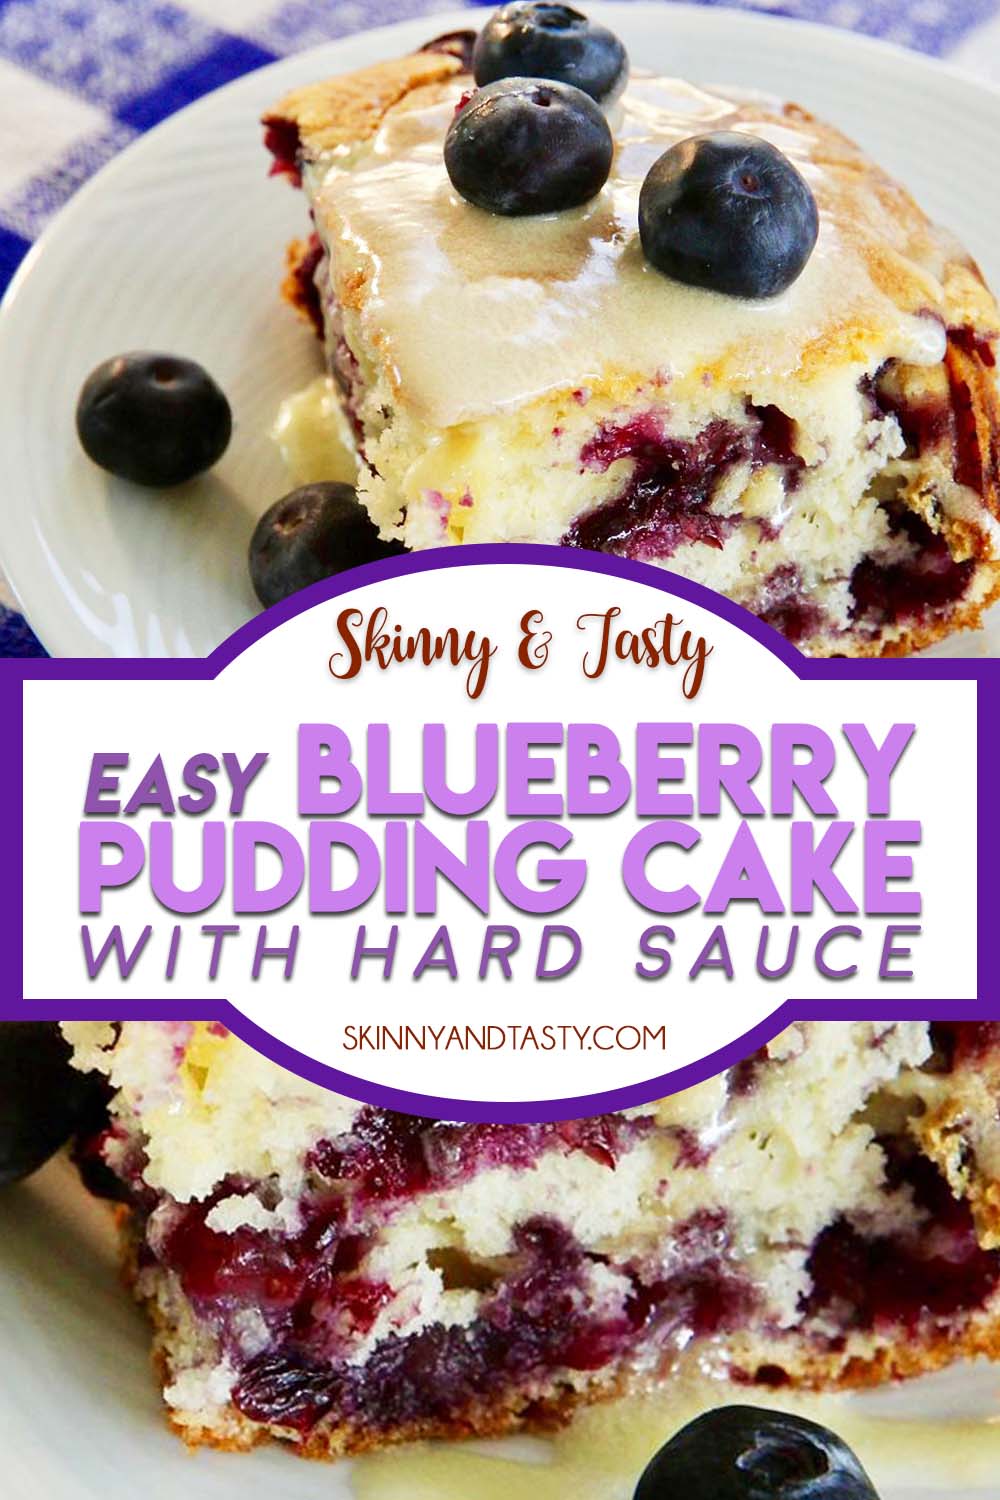 Lemon Blueberry Pudding Cake - Bunny's Warm Oven